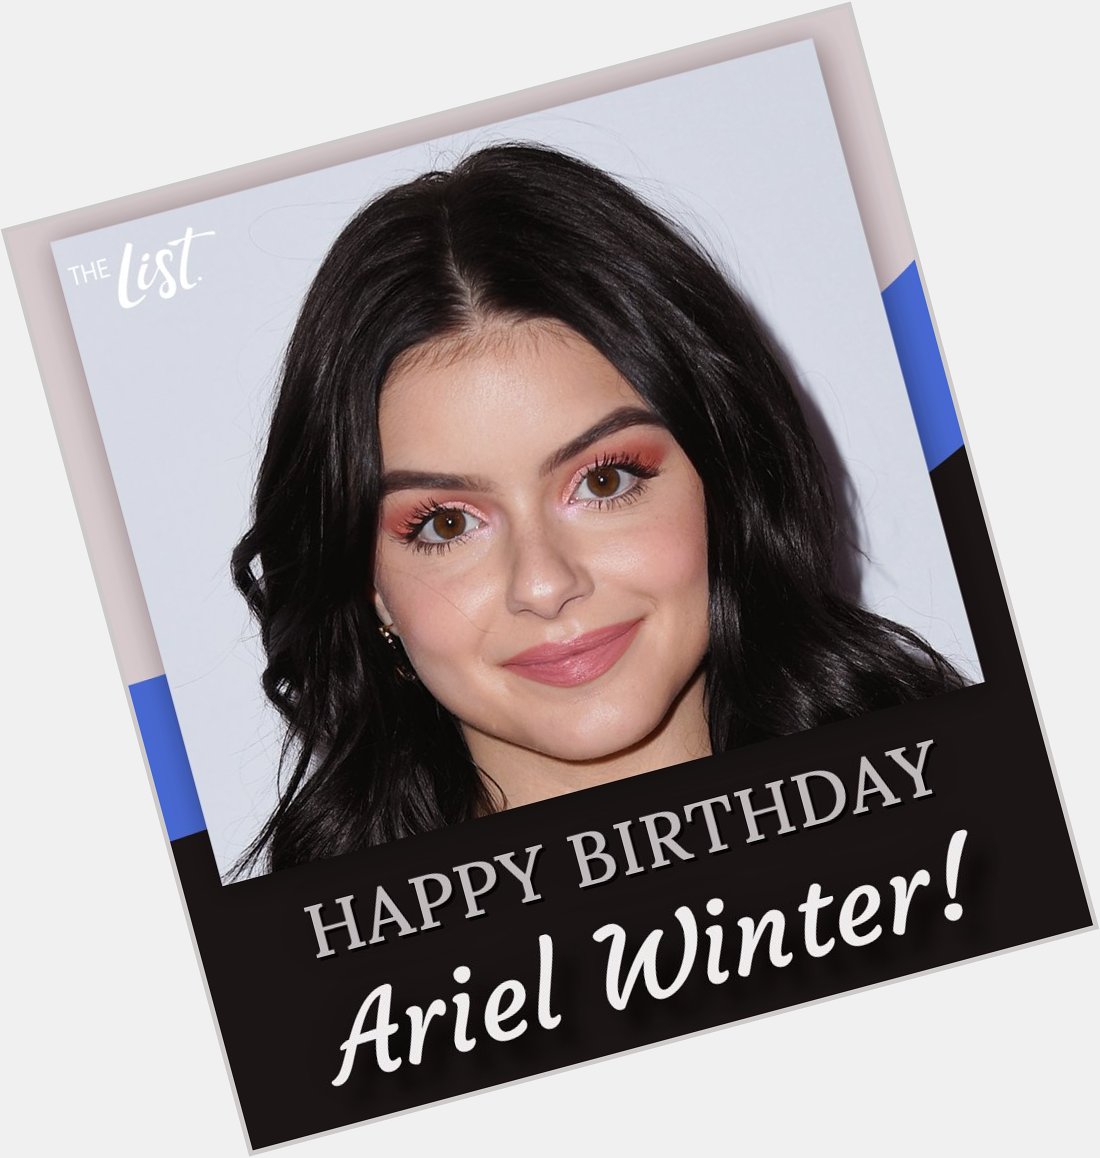 Happy birthday to Ariel Winter! 